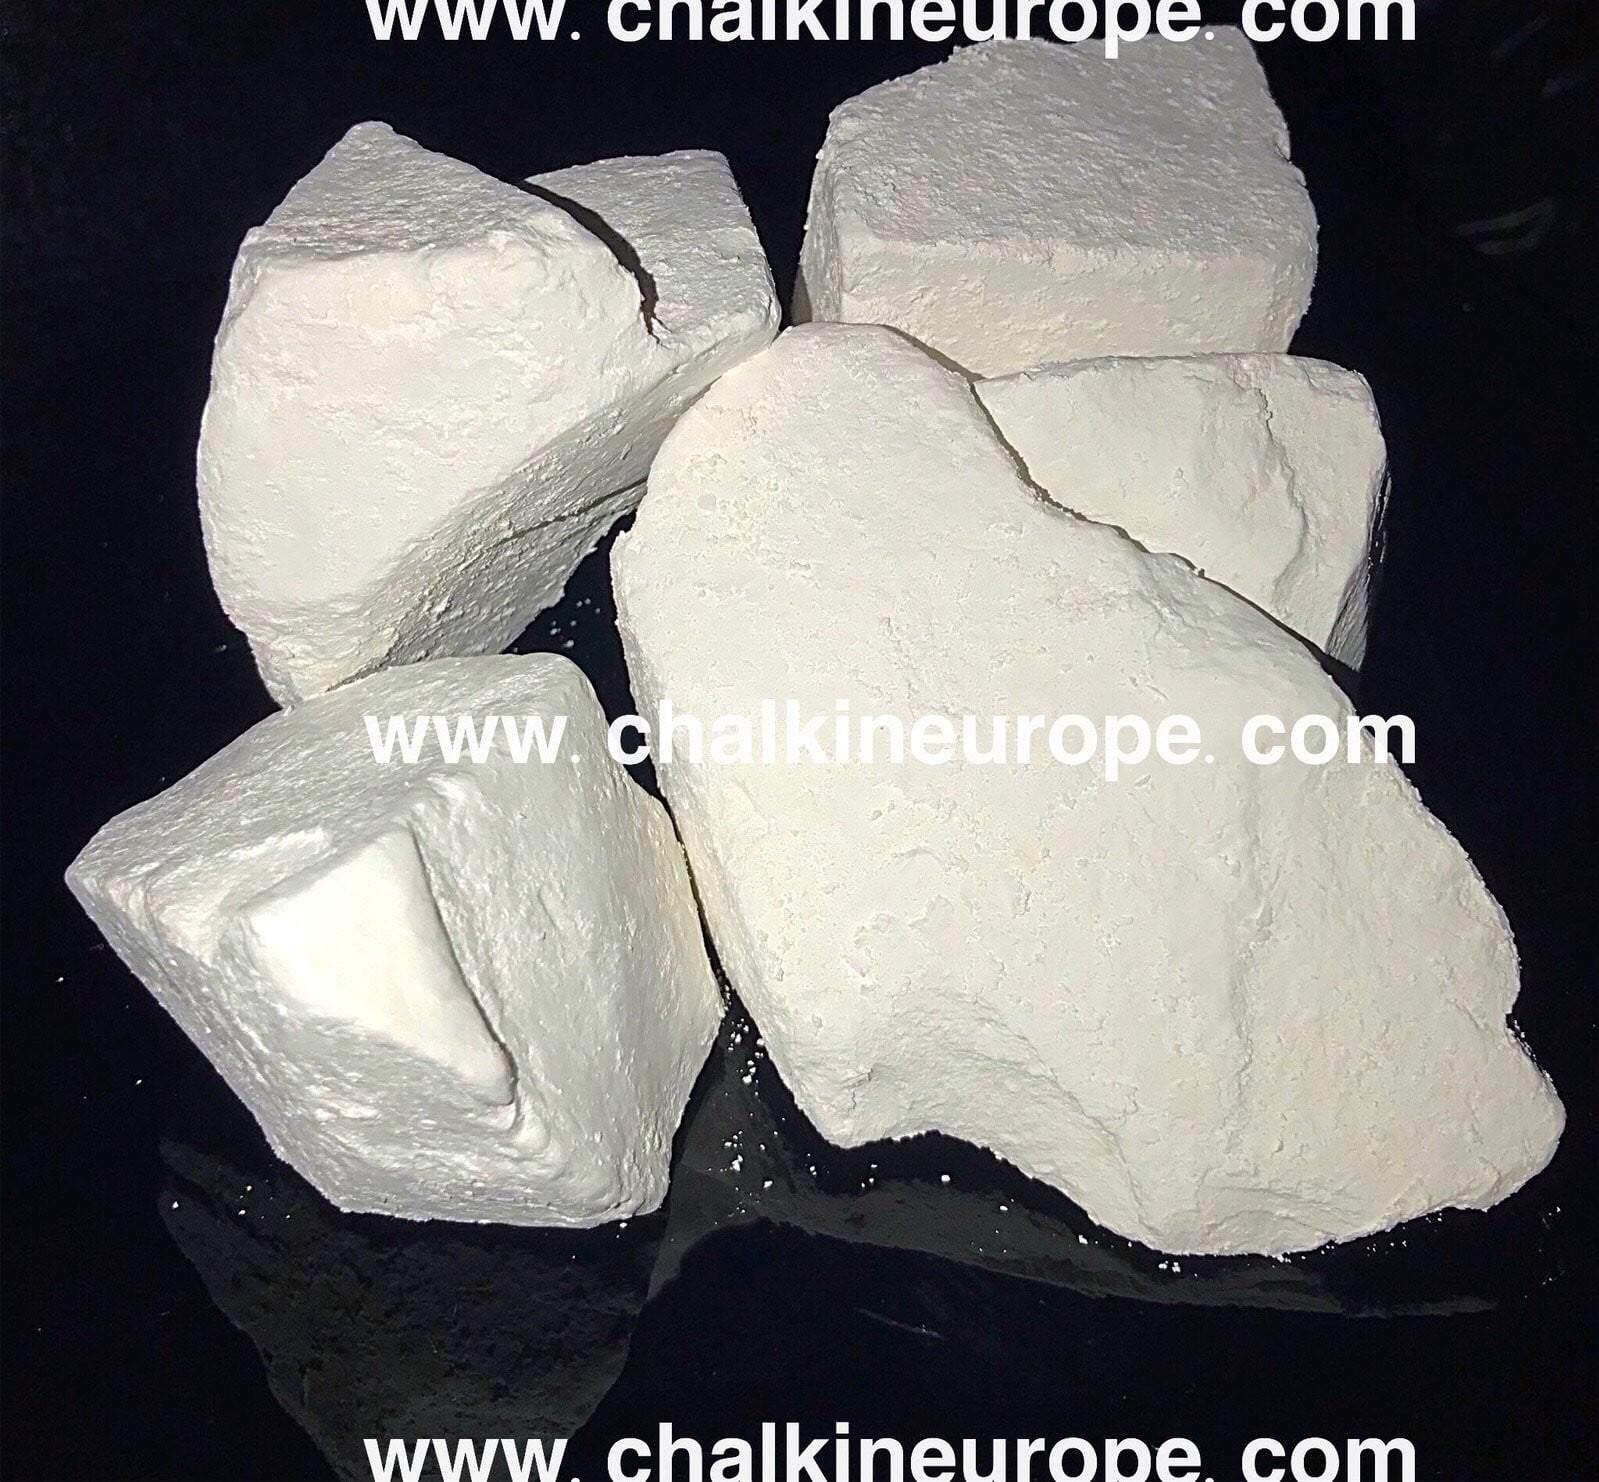 Vvett Cream Chalk - Chalkineurope